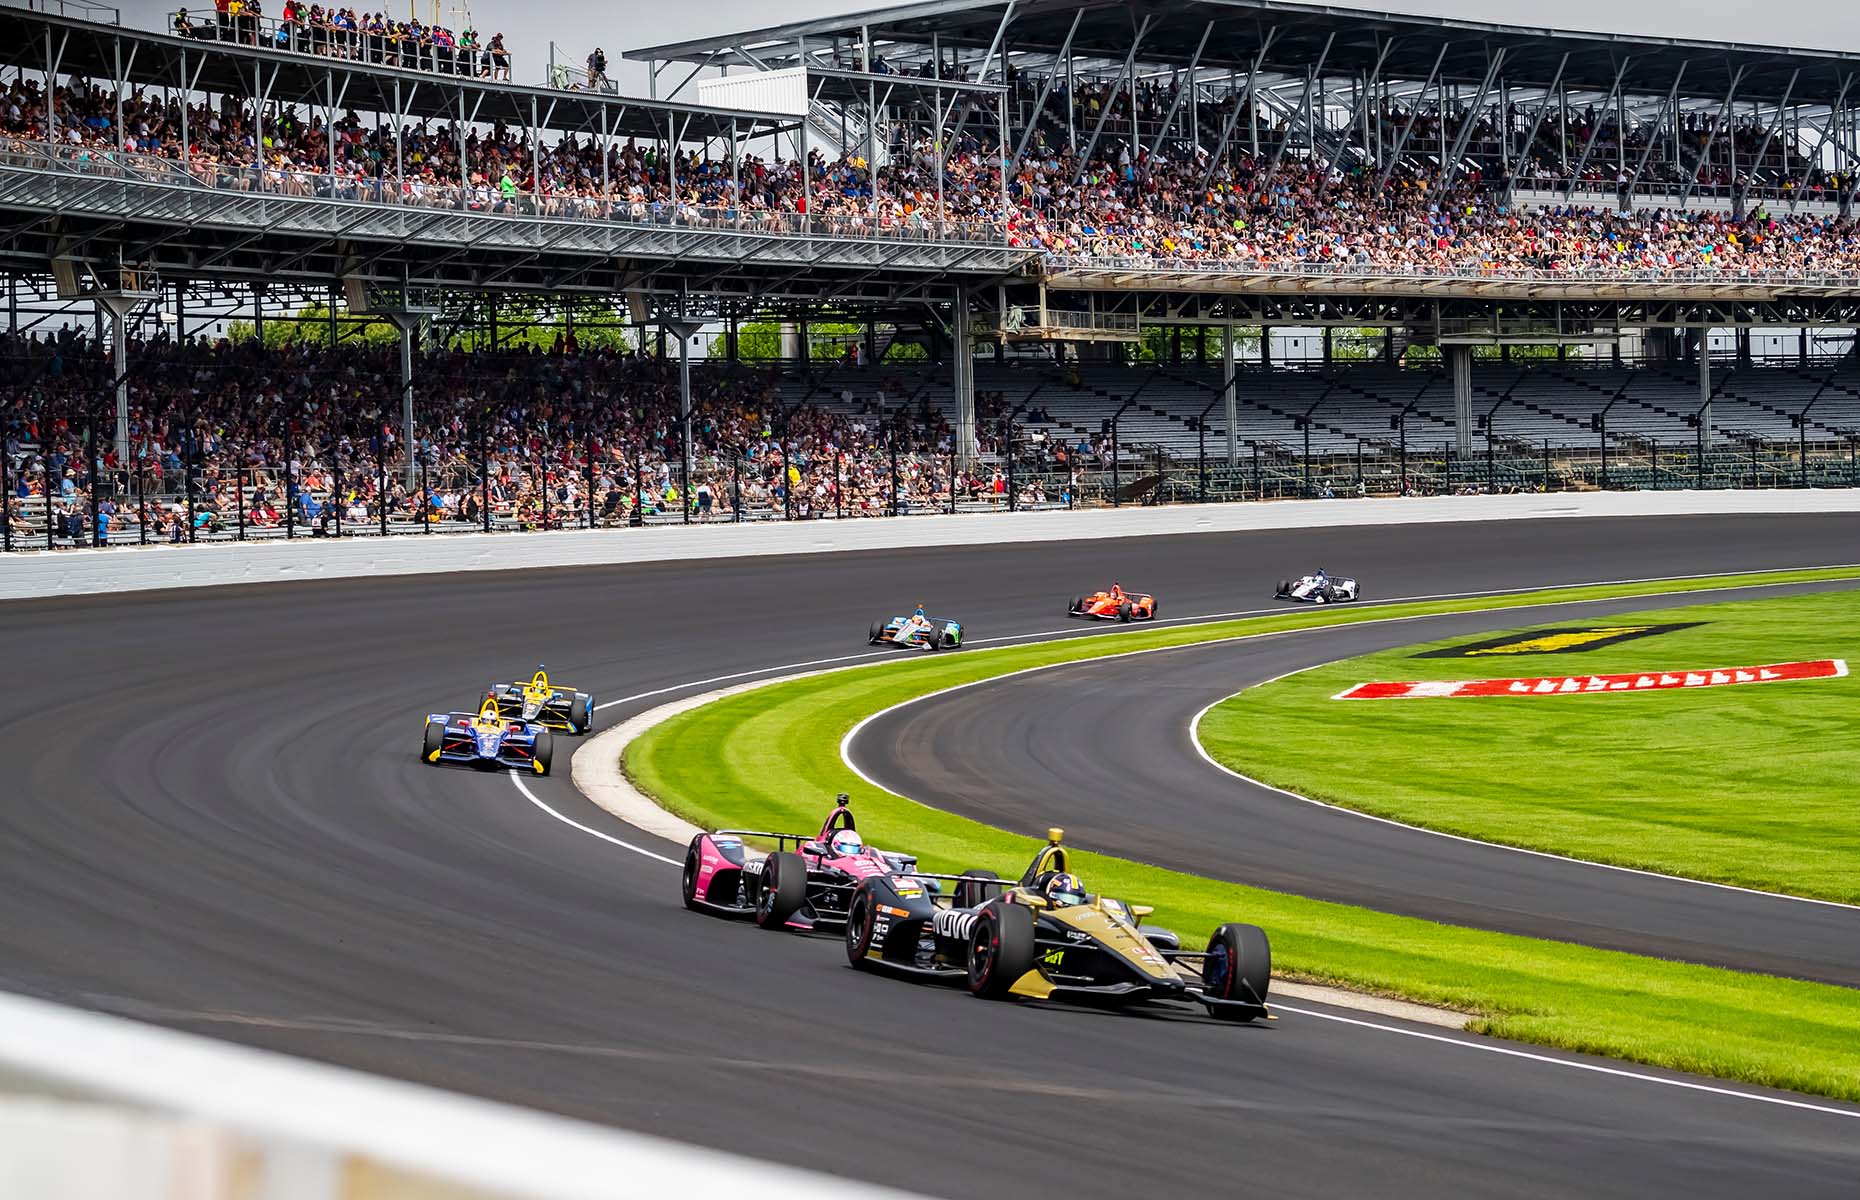 Indianapolis Motor Speedway, Indiana. (Image: Grindstone Media Group/Shutterstock)